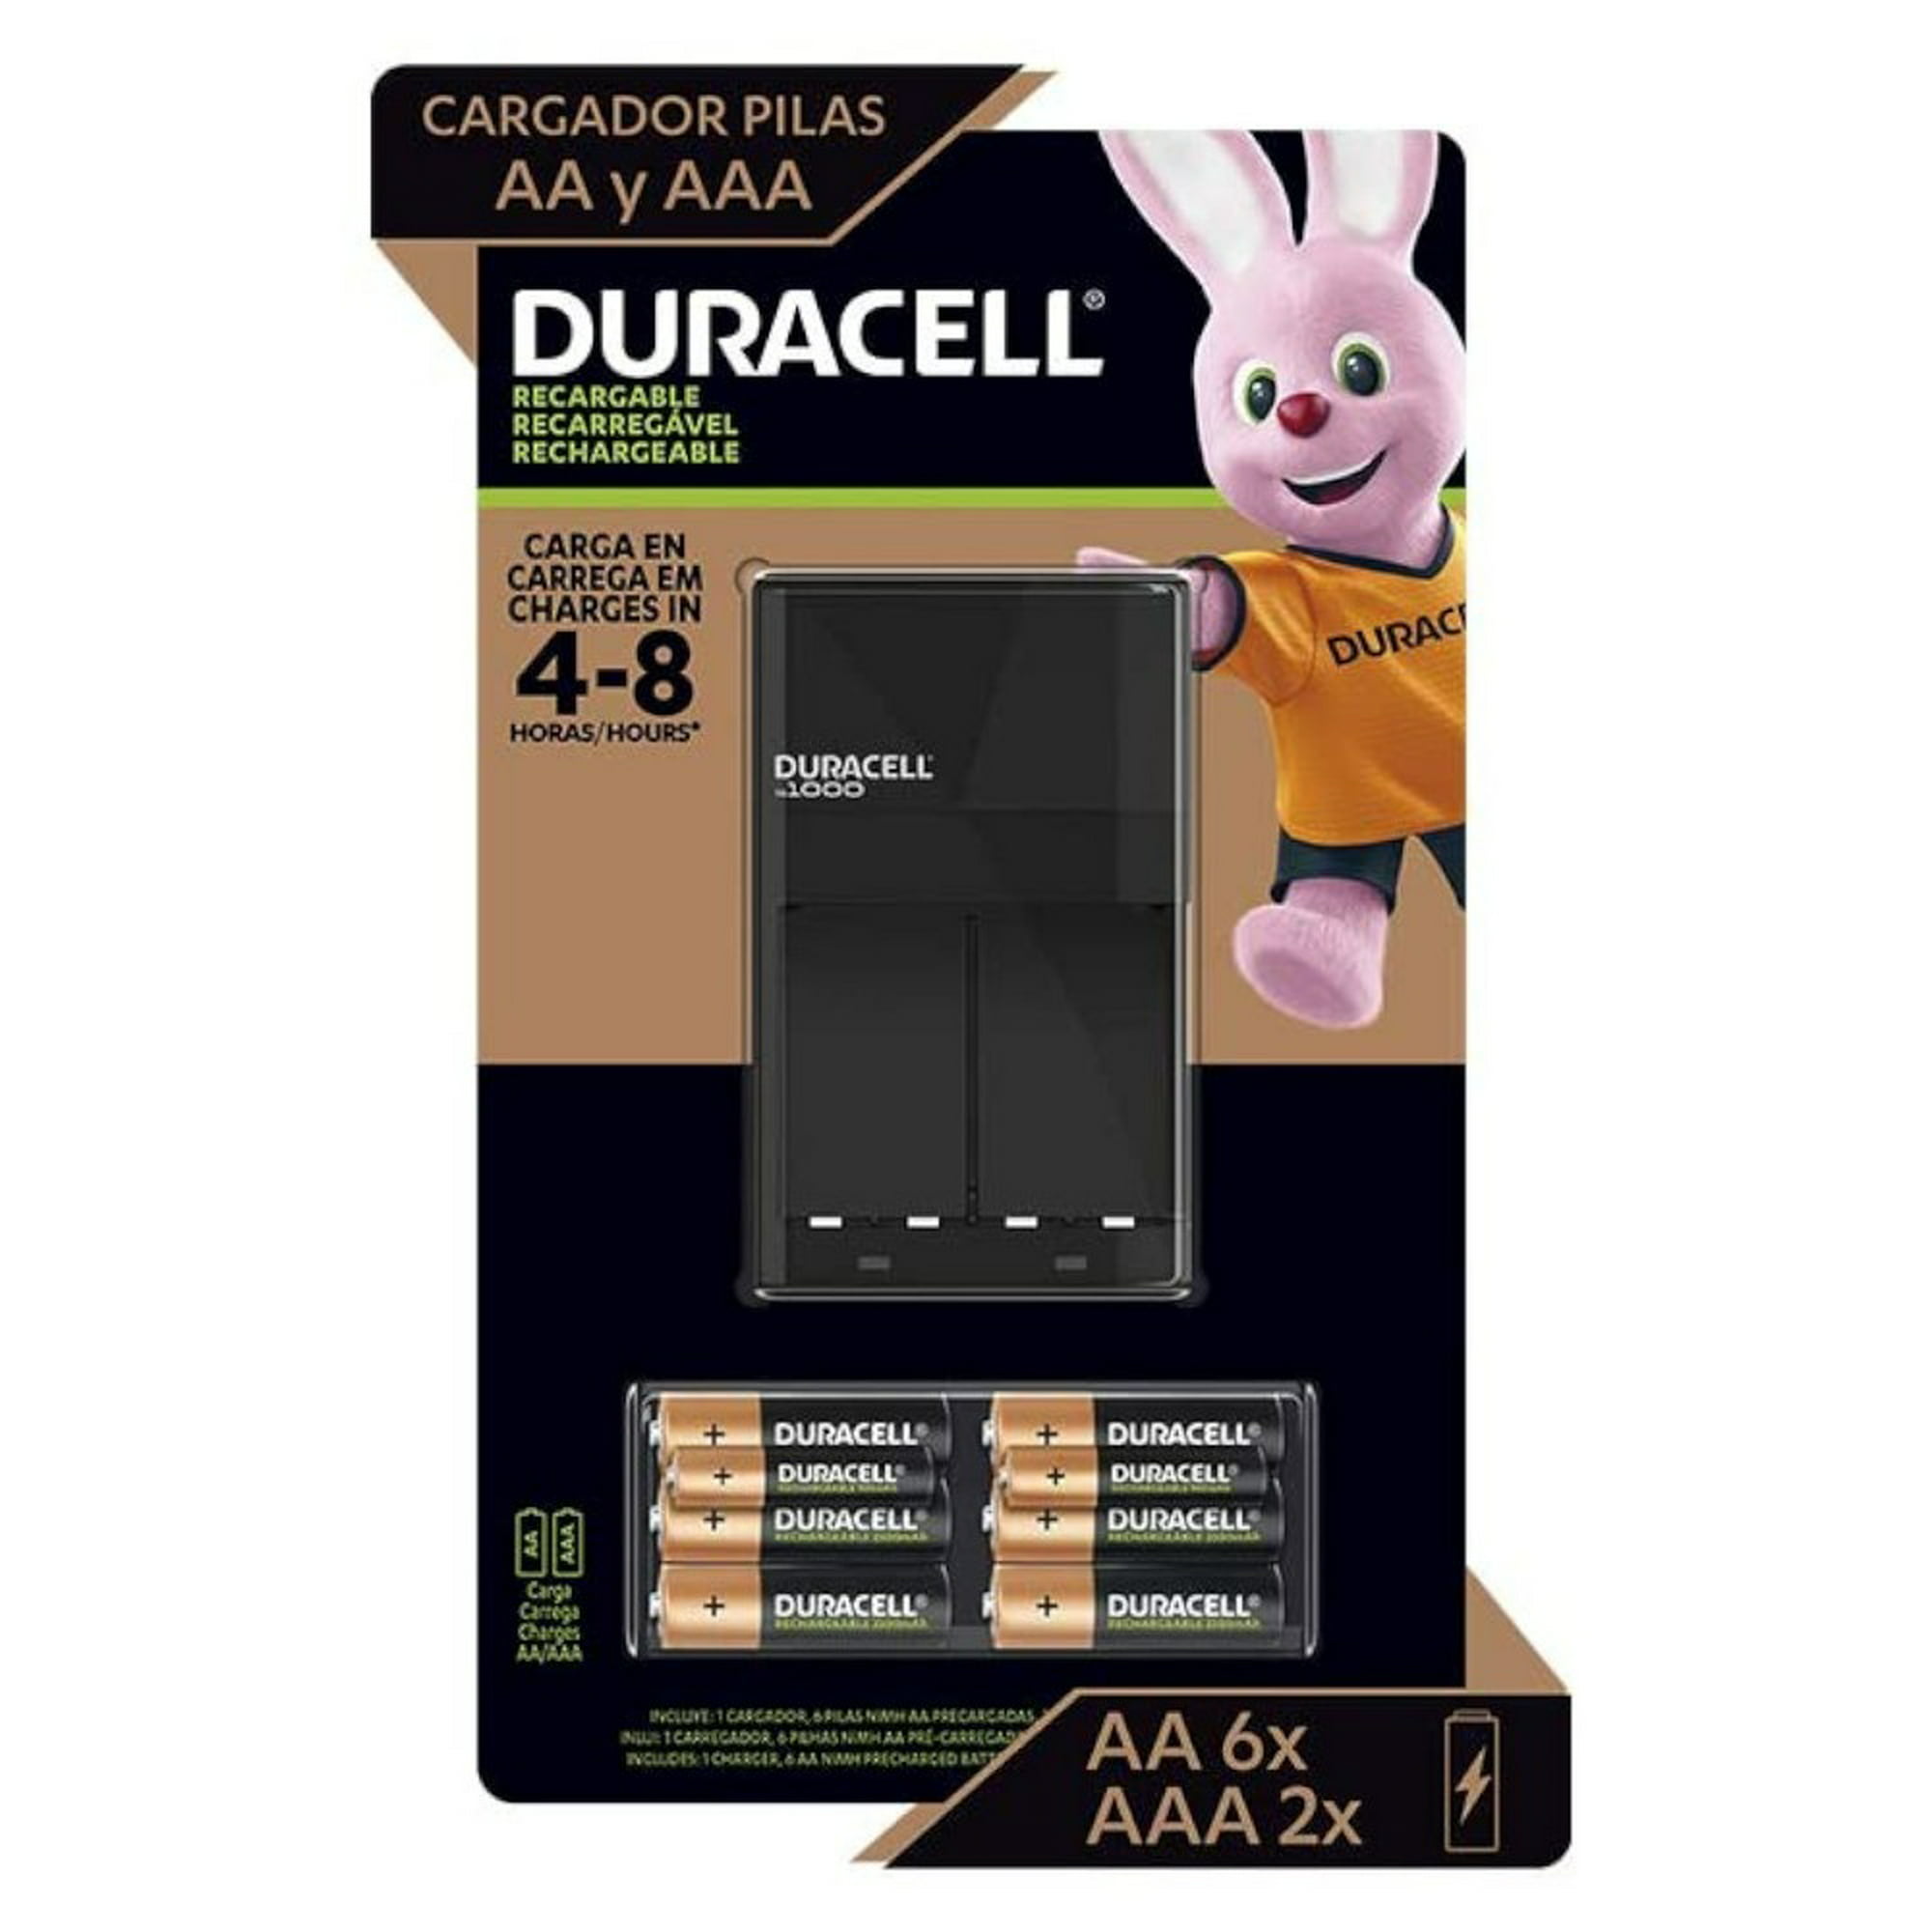 Kit duracell recargable duracell 5010032 cargador + 6 pilas aa + 2 pilas aaa